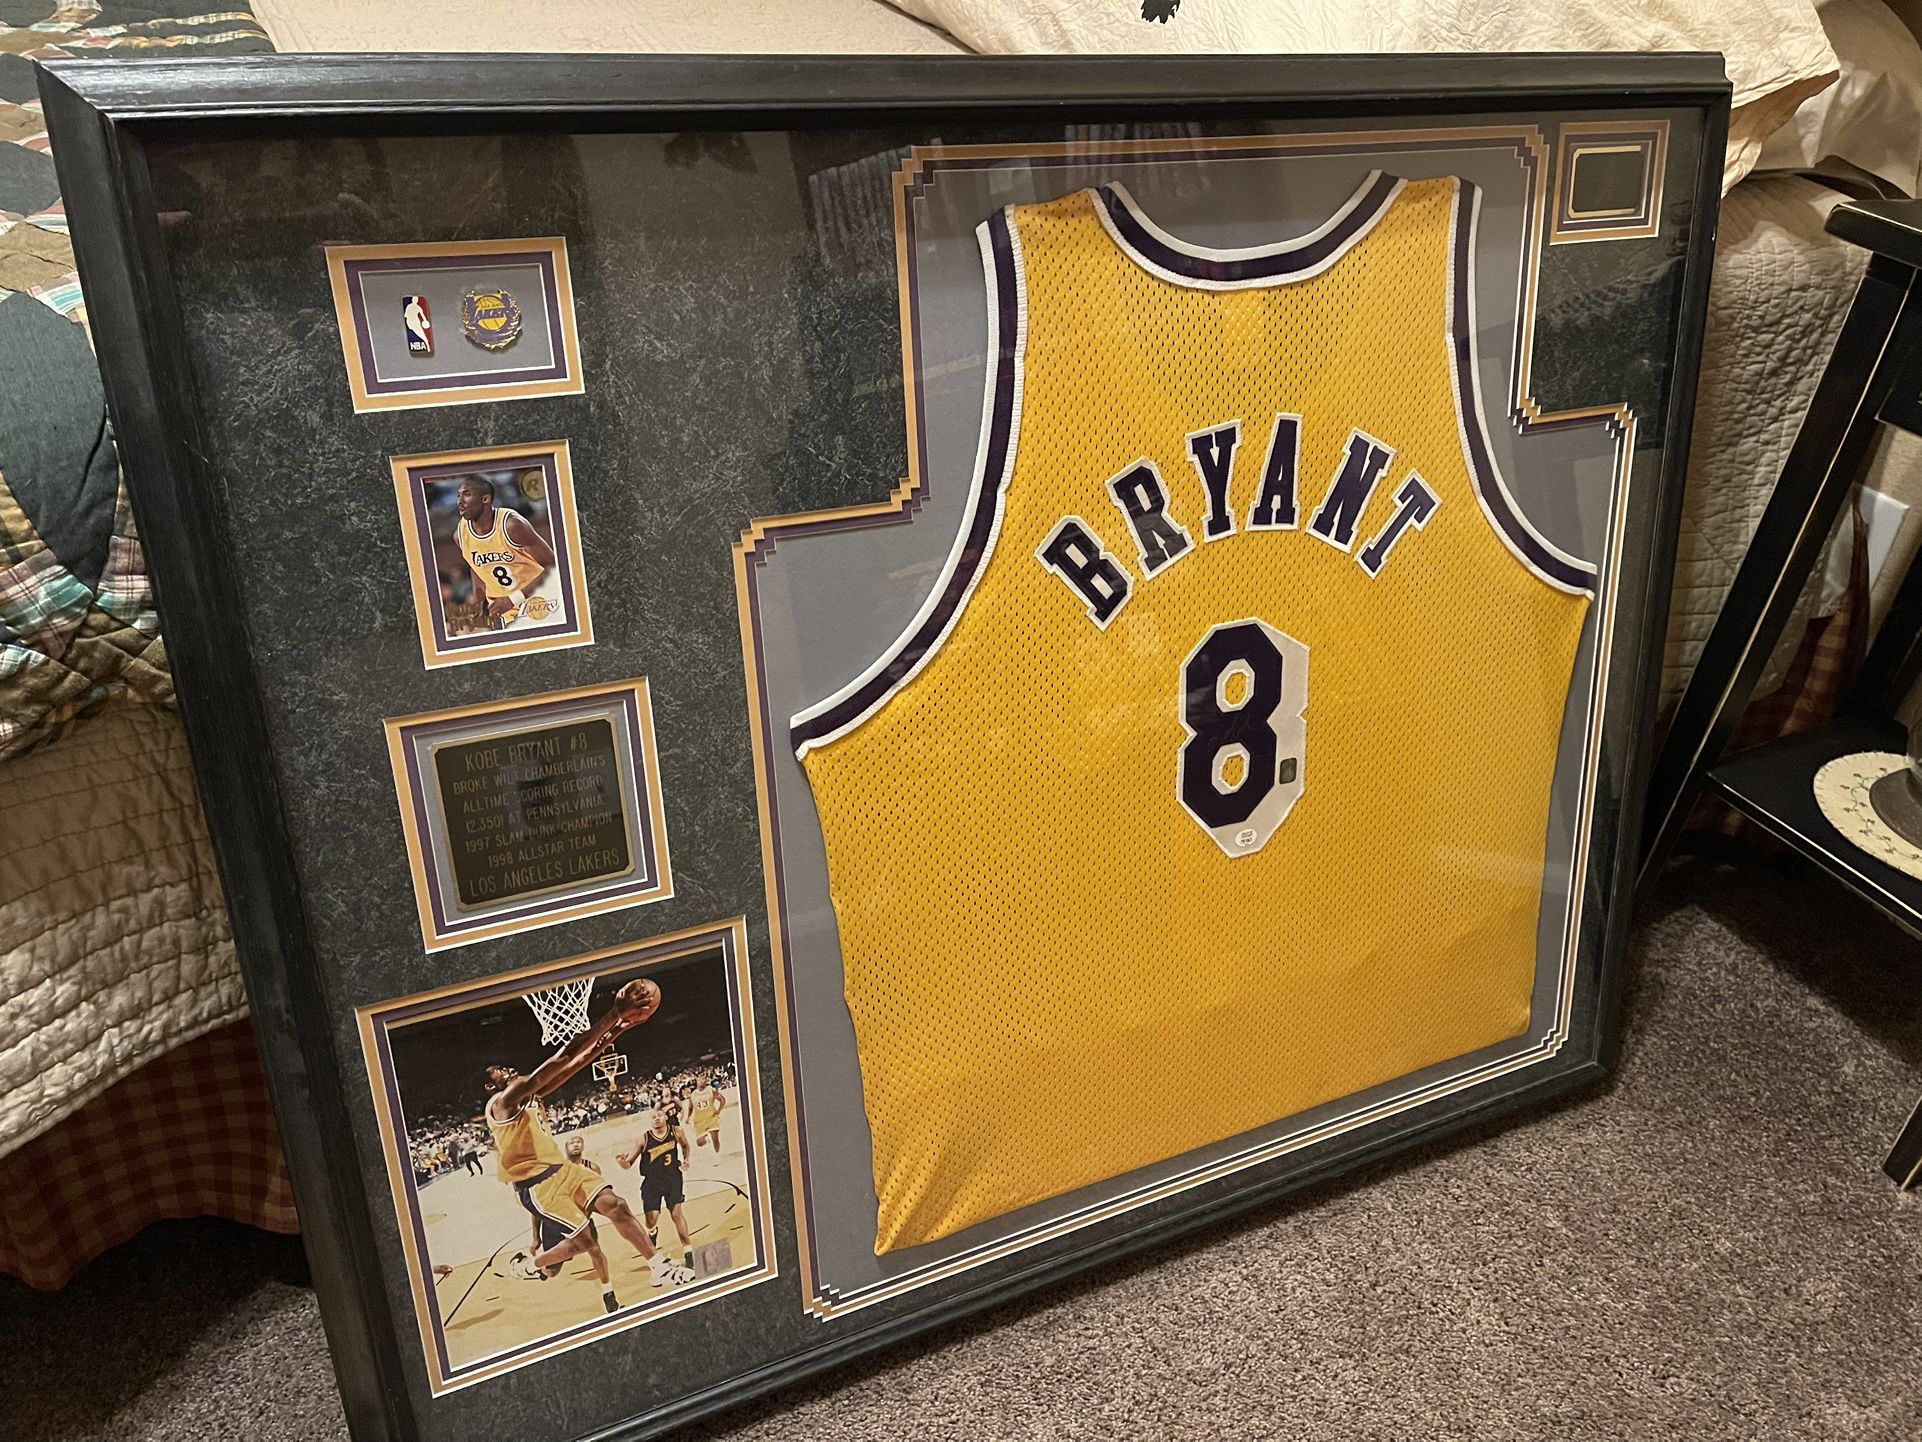 Vintage Lakers jersey for Sale in Phoenix, AZ - OfferUp